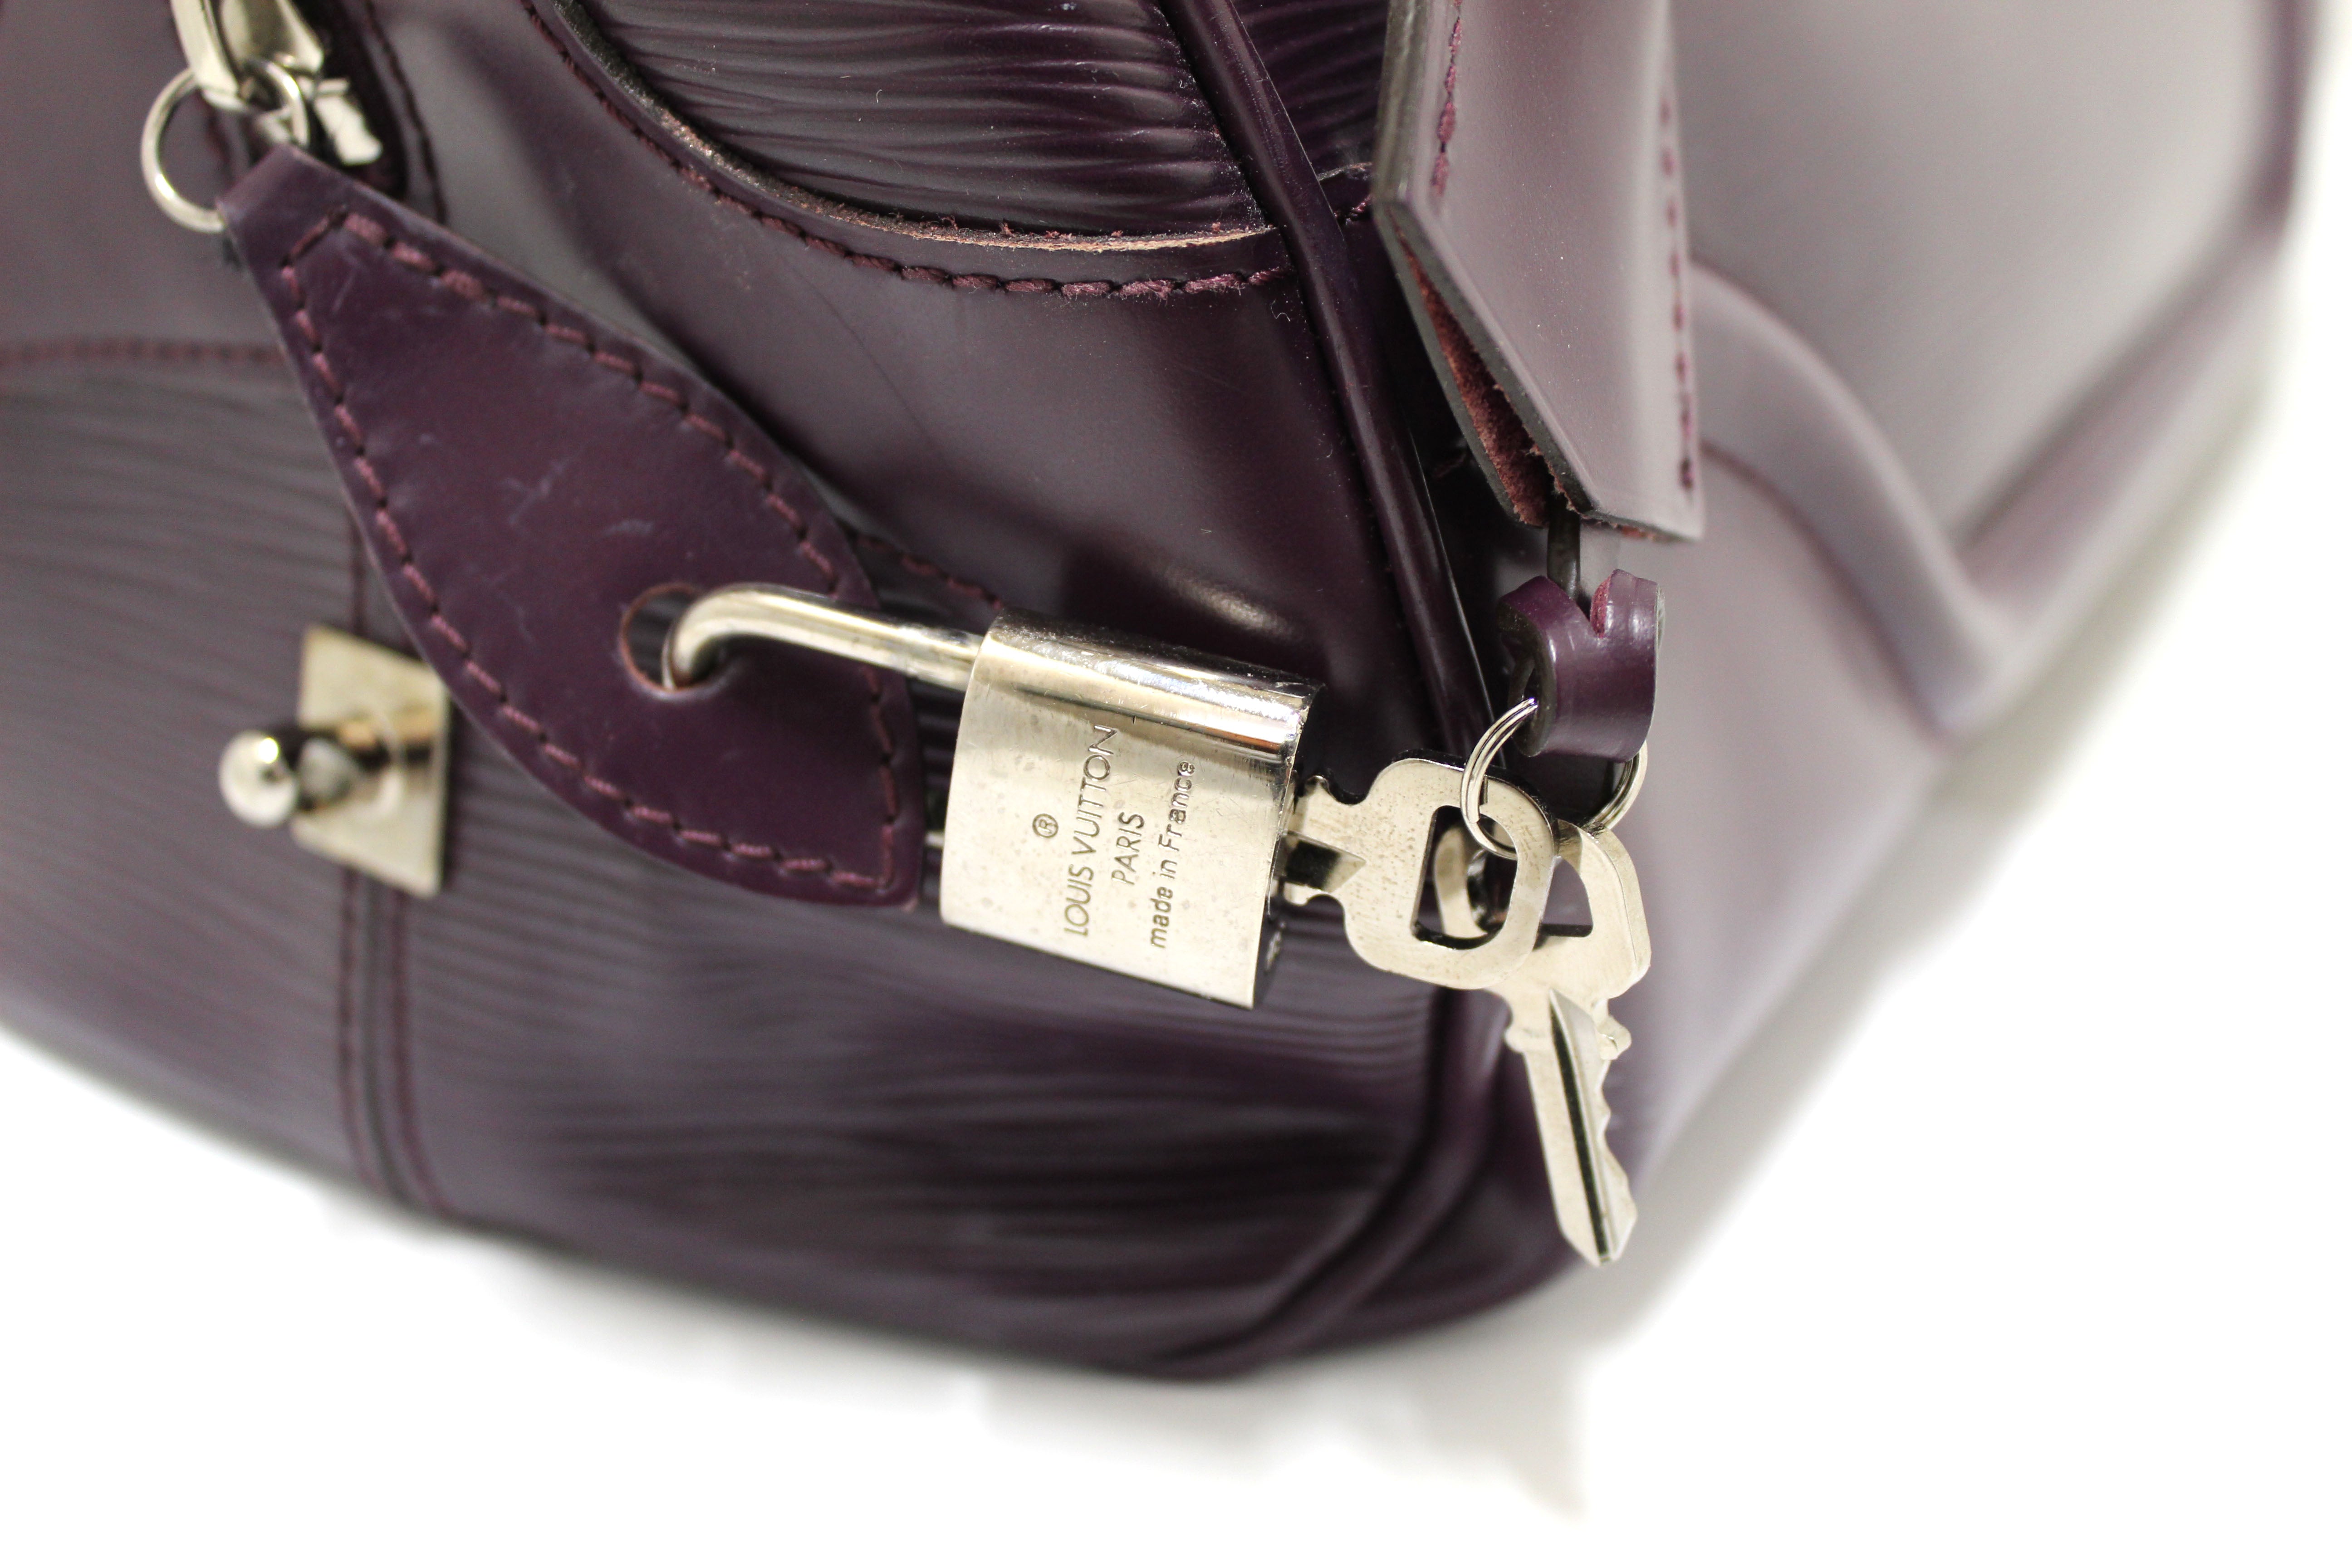 Louis Vuitton Purple Handbags